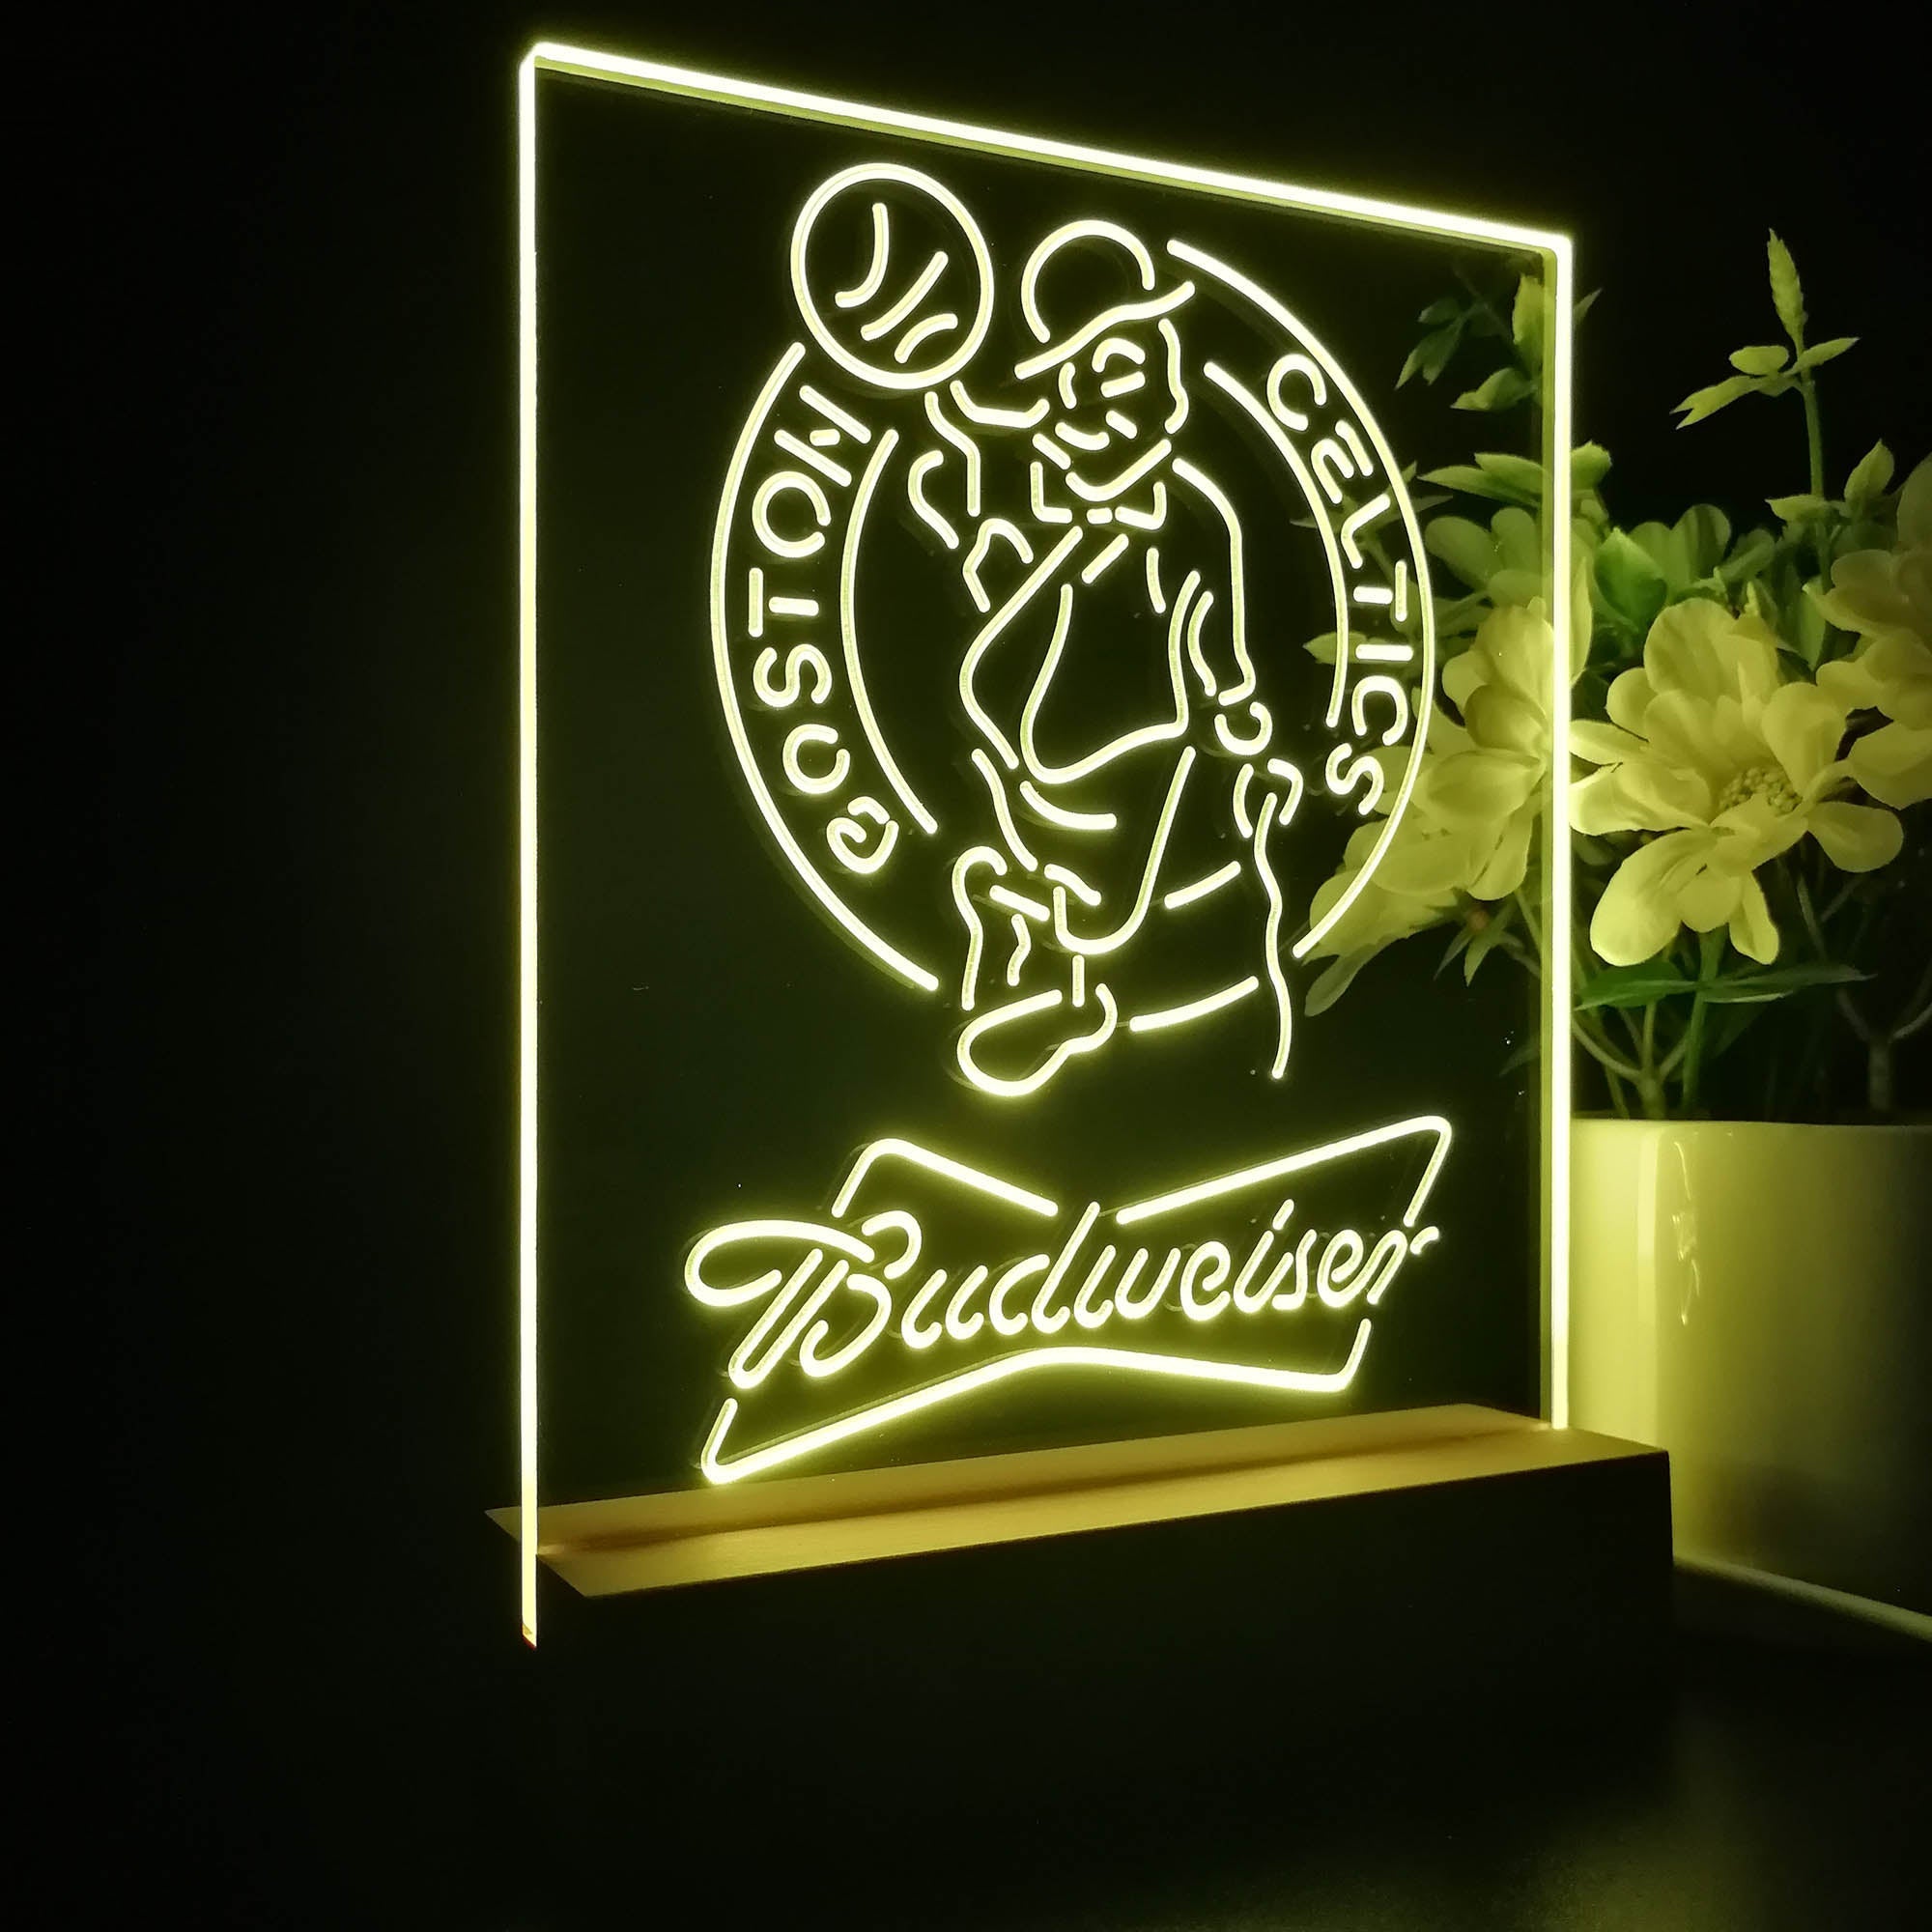 Boston Celtics Budweiser Neon Sign Pub Bar Lamp